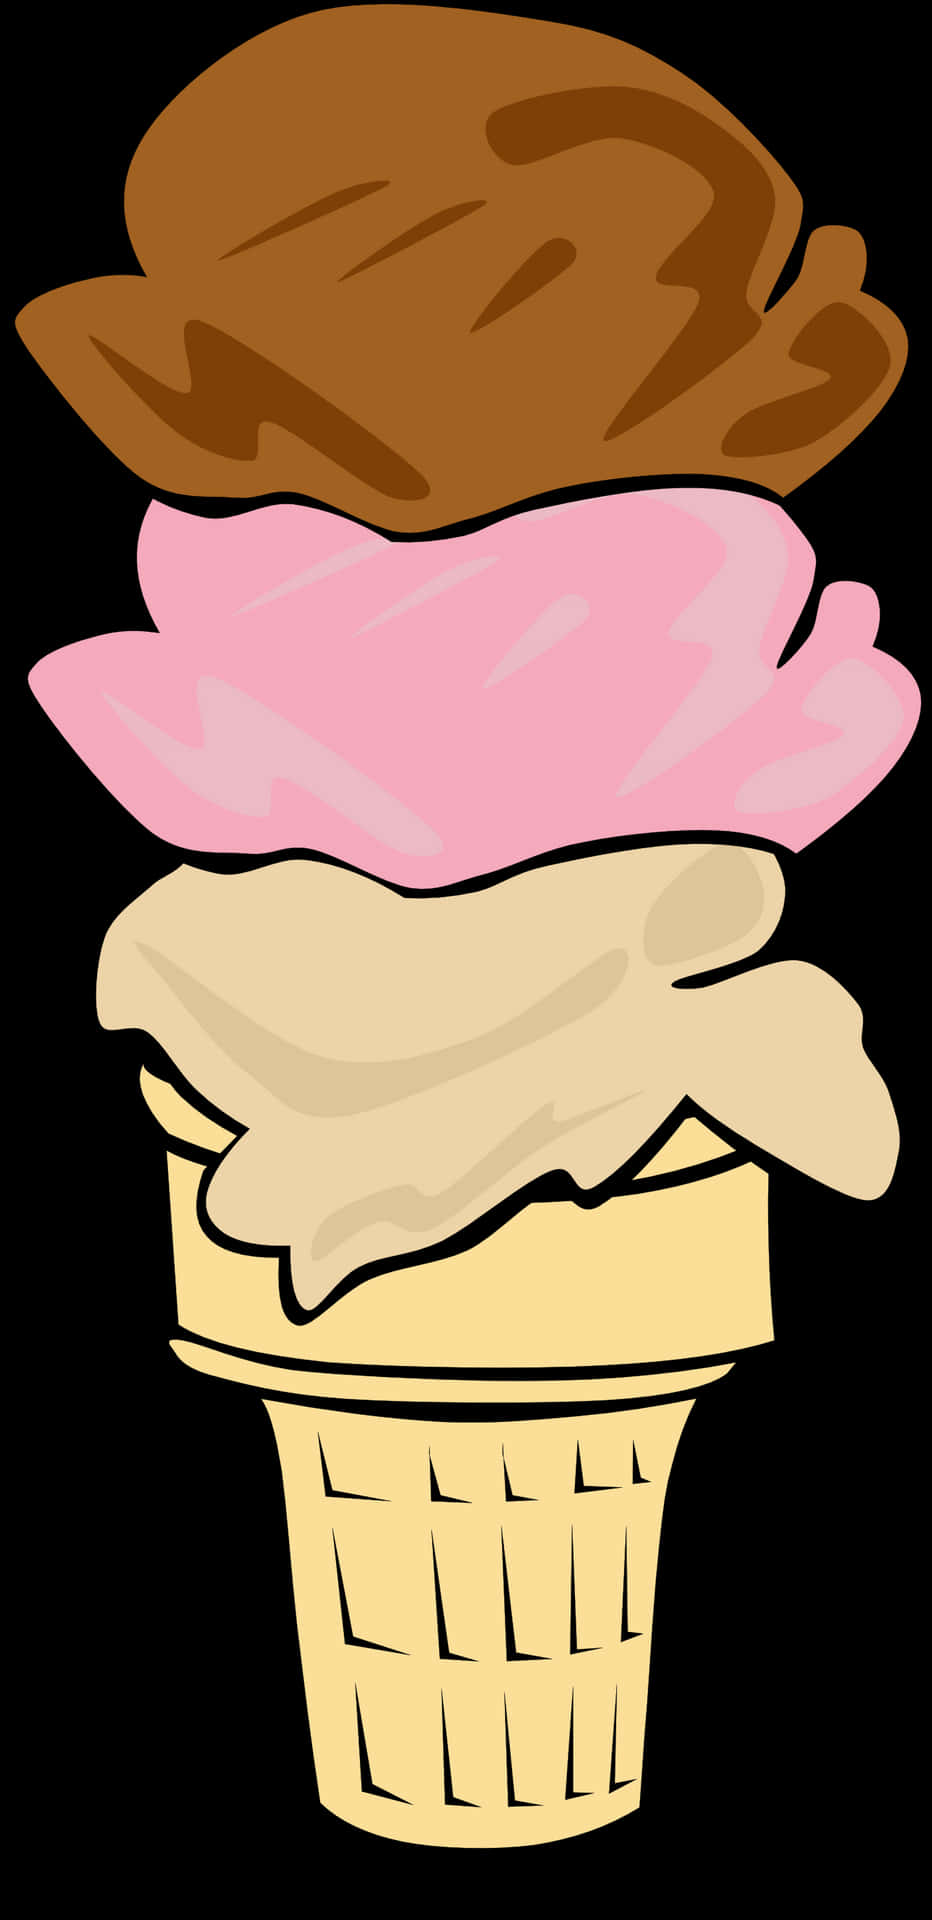 Triple Scoop Ice Cream Cone Illustration PNG image